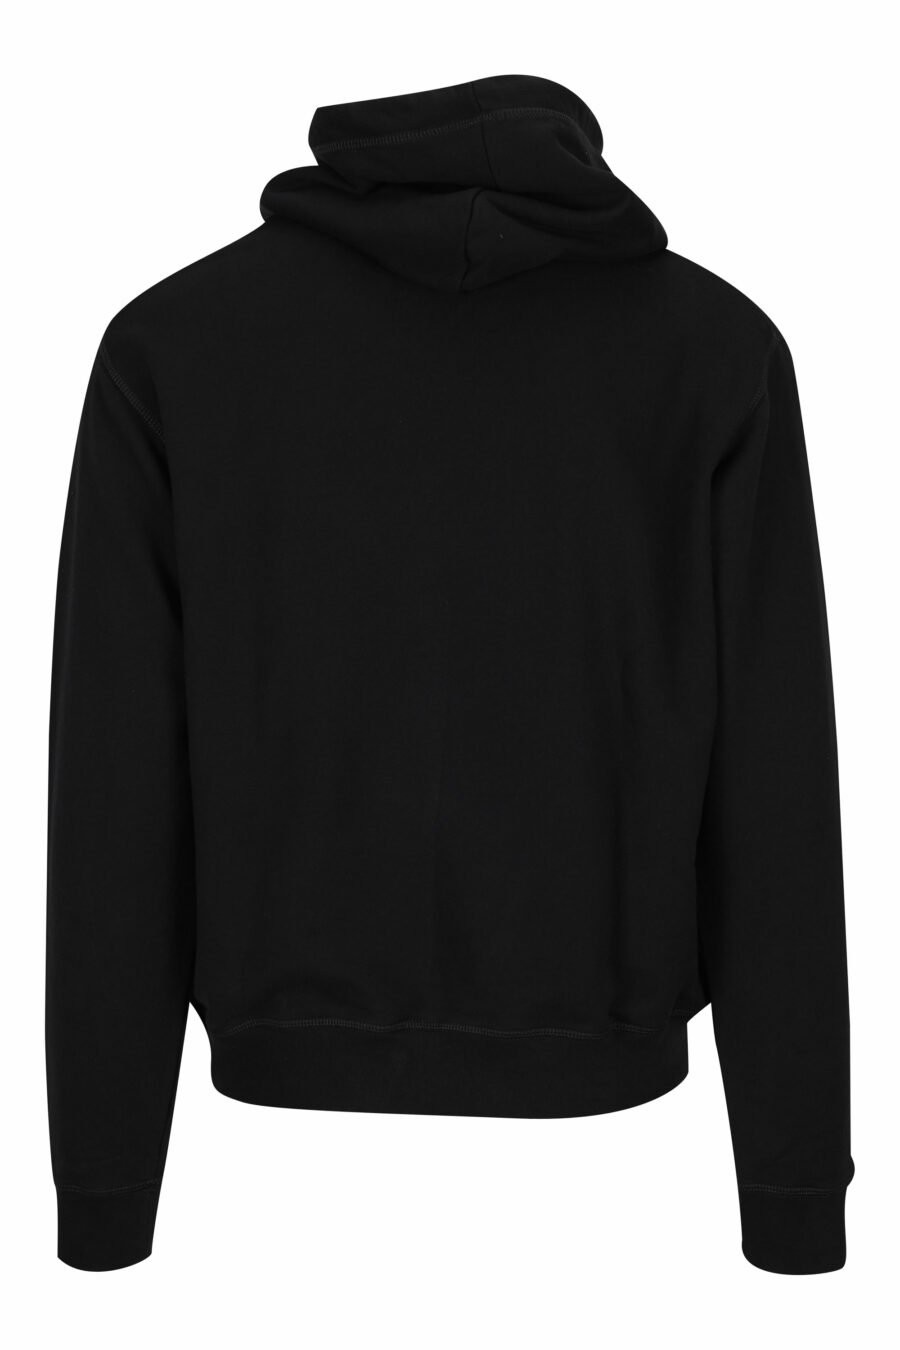 Black hooded sweatshirt with basketball dog print - 8054148258160 1